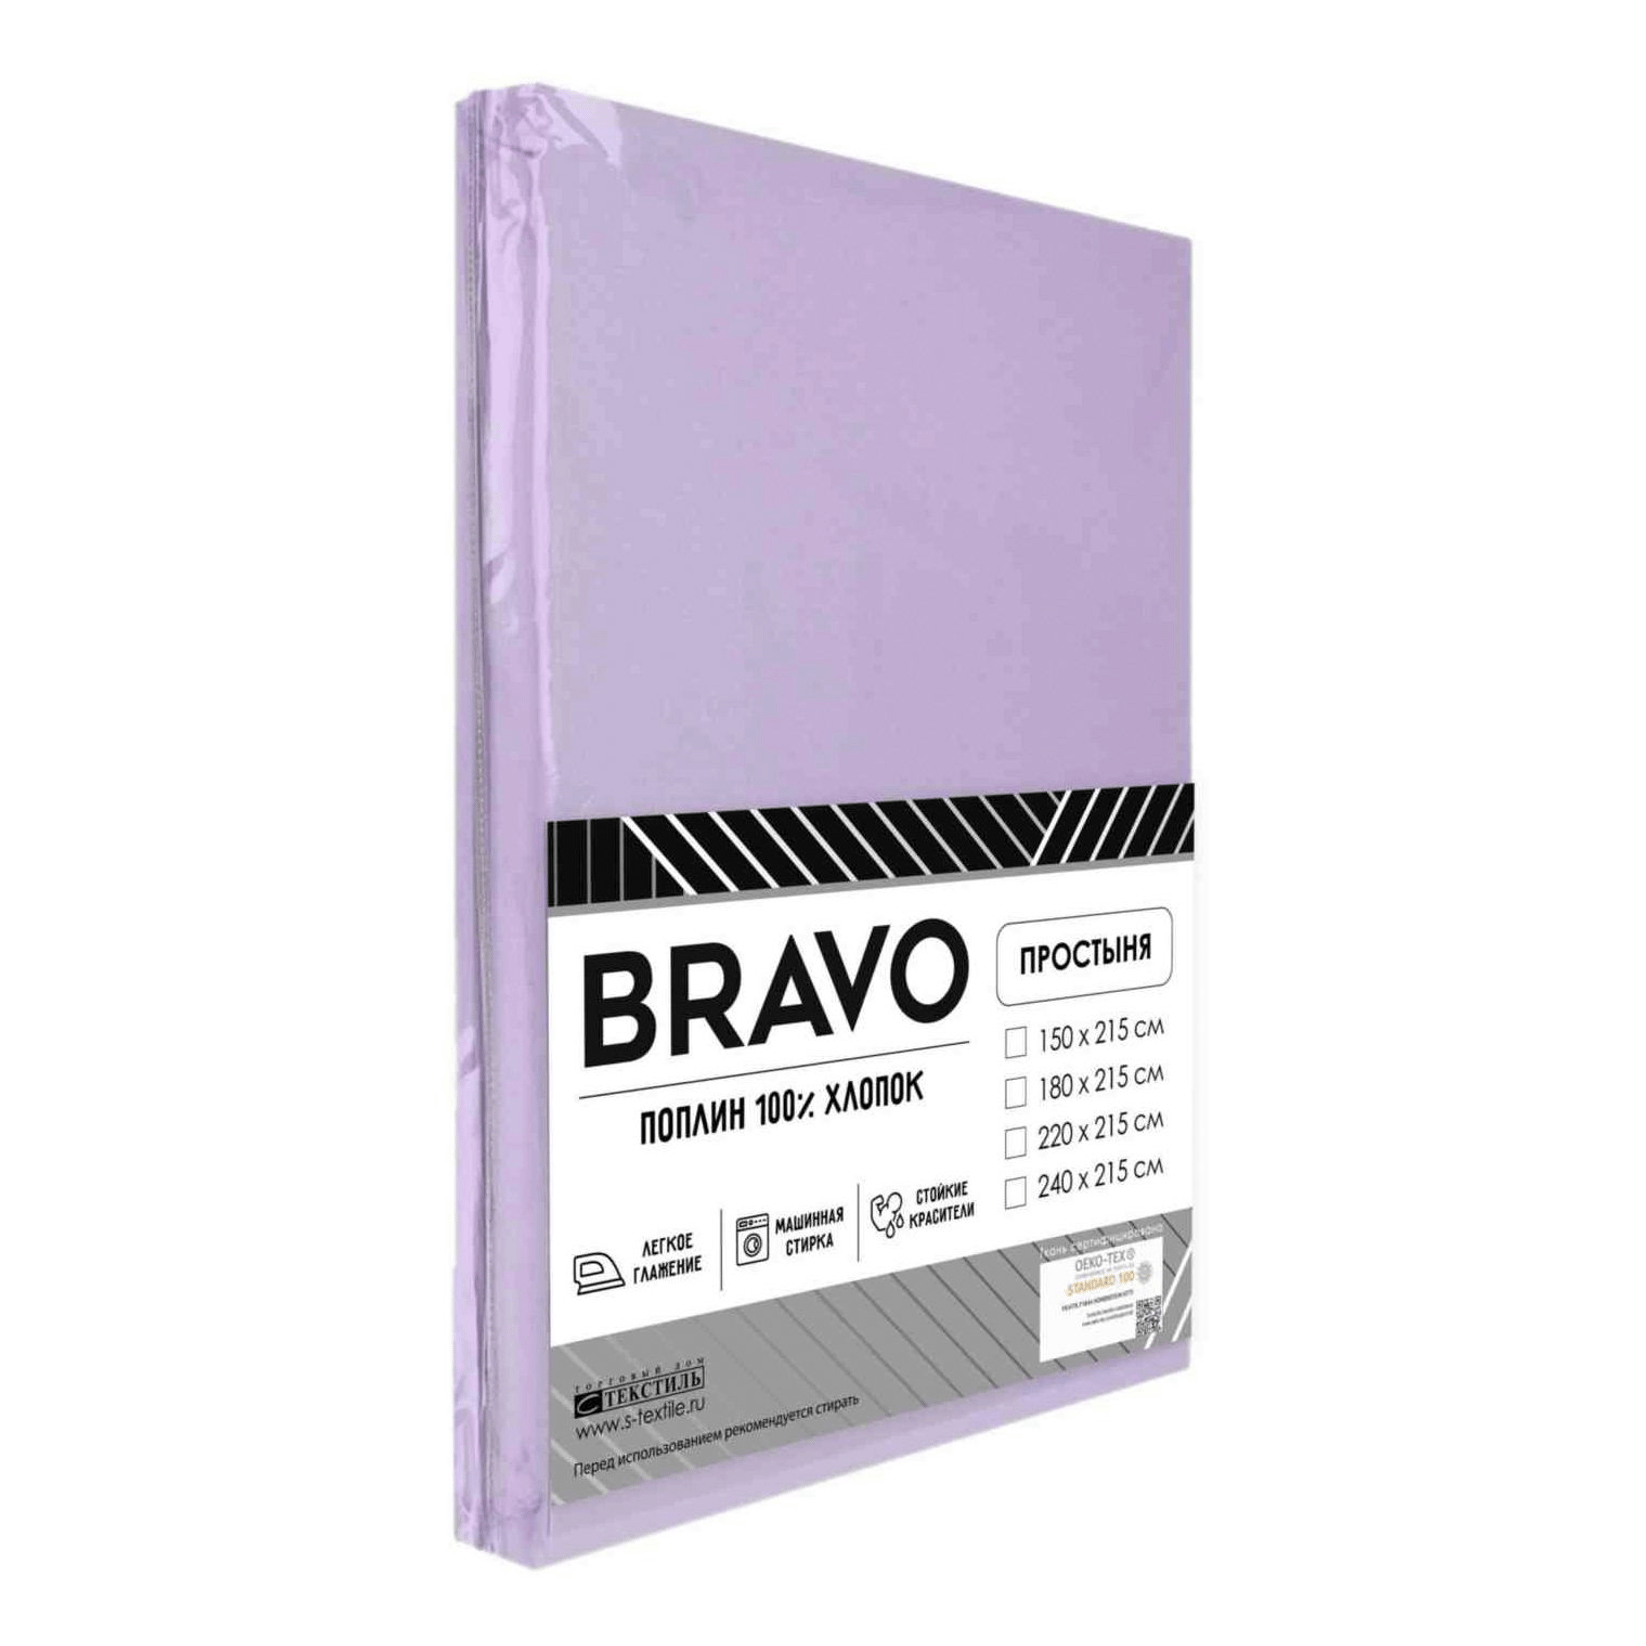 Простыня Bravo 150 х 215 см поплин сиреневая